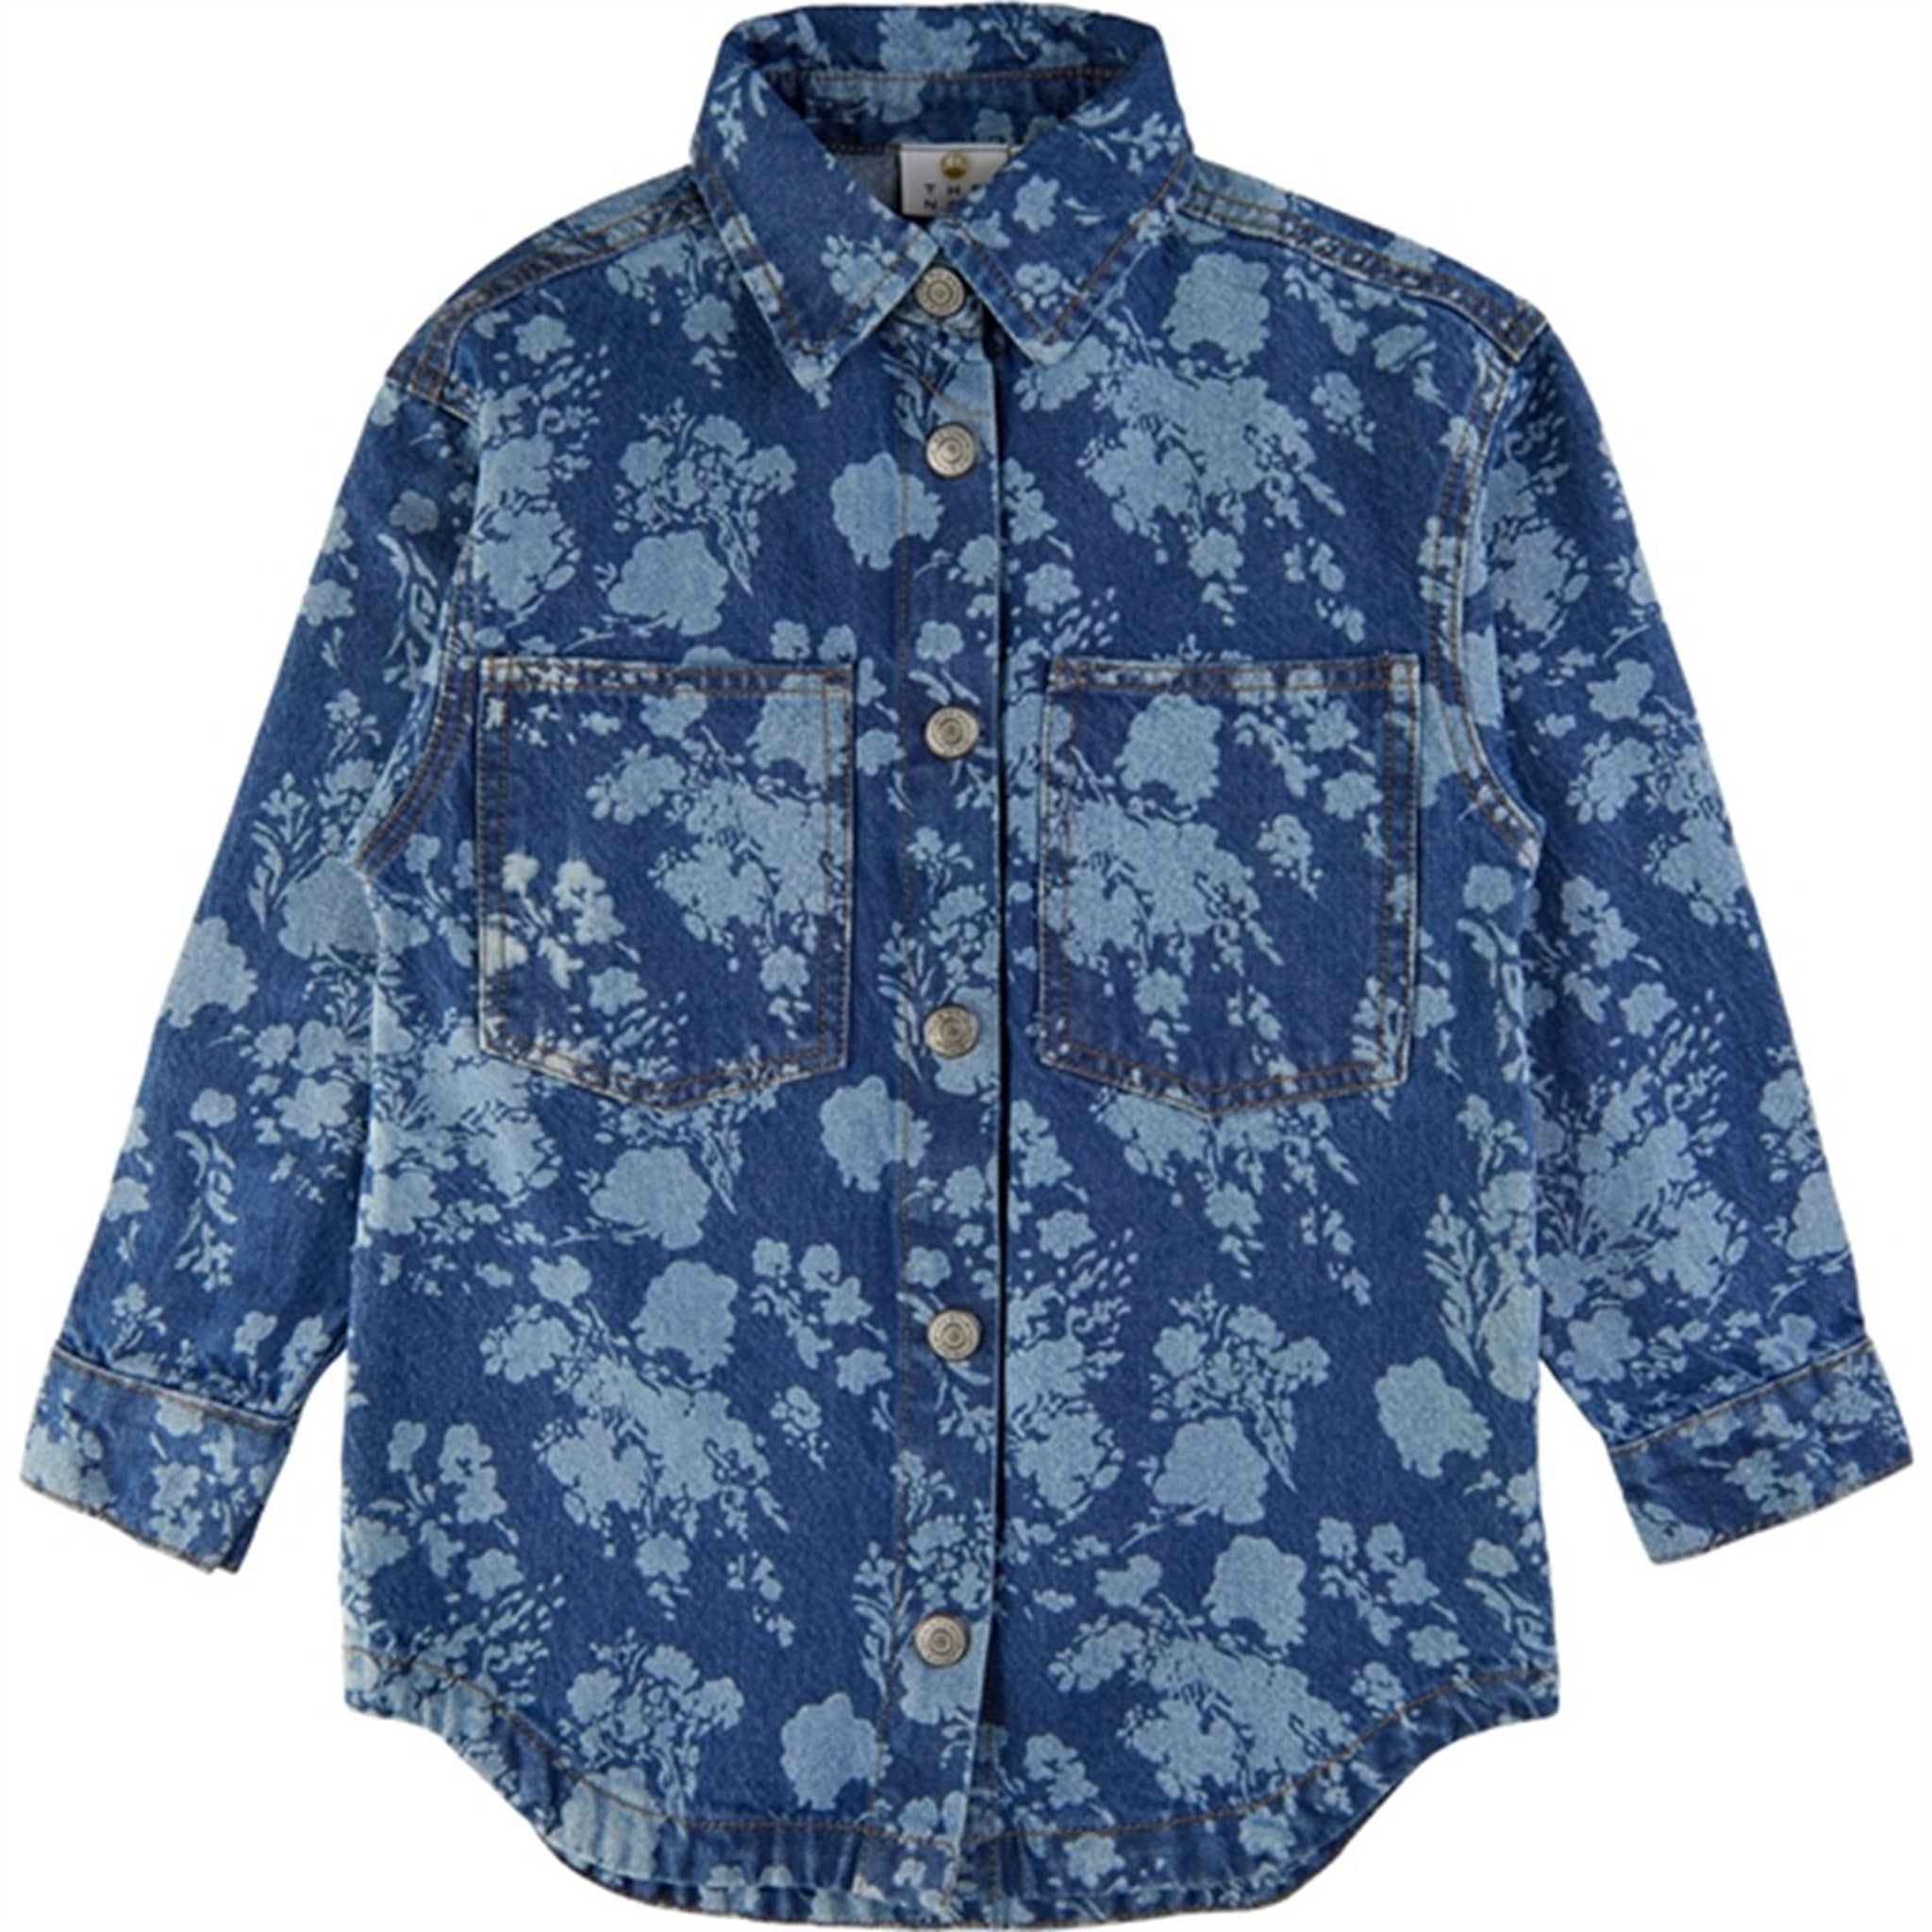 THE NEW Blue Denim Florana Denim Shirt